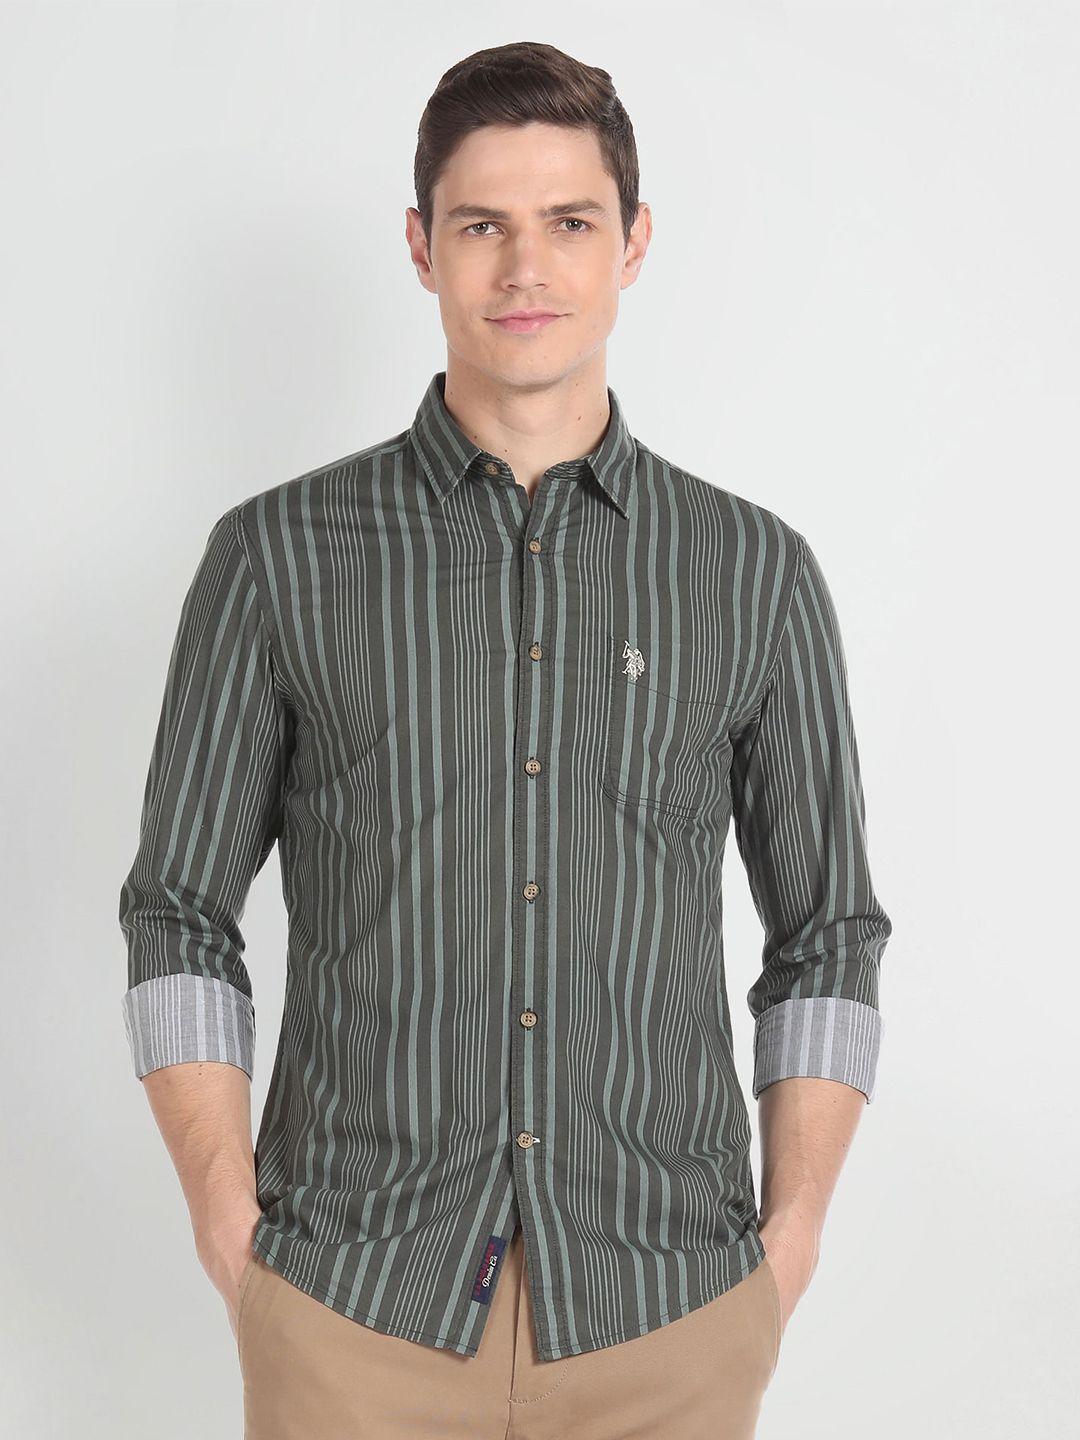 u.s. polo assn. denim co. striped cotton casual shirt